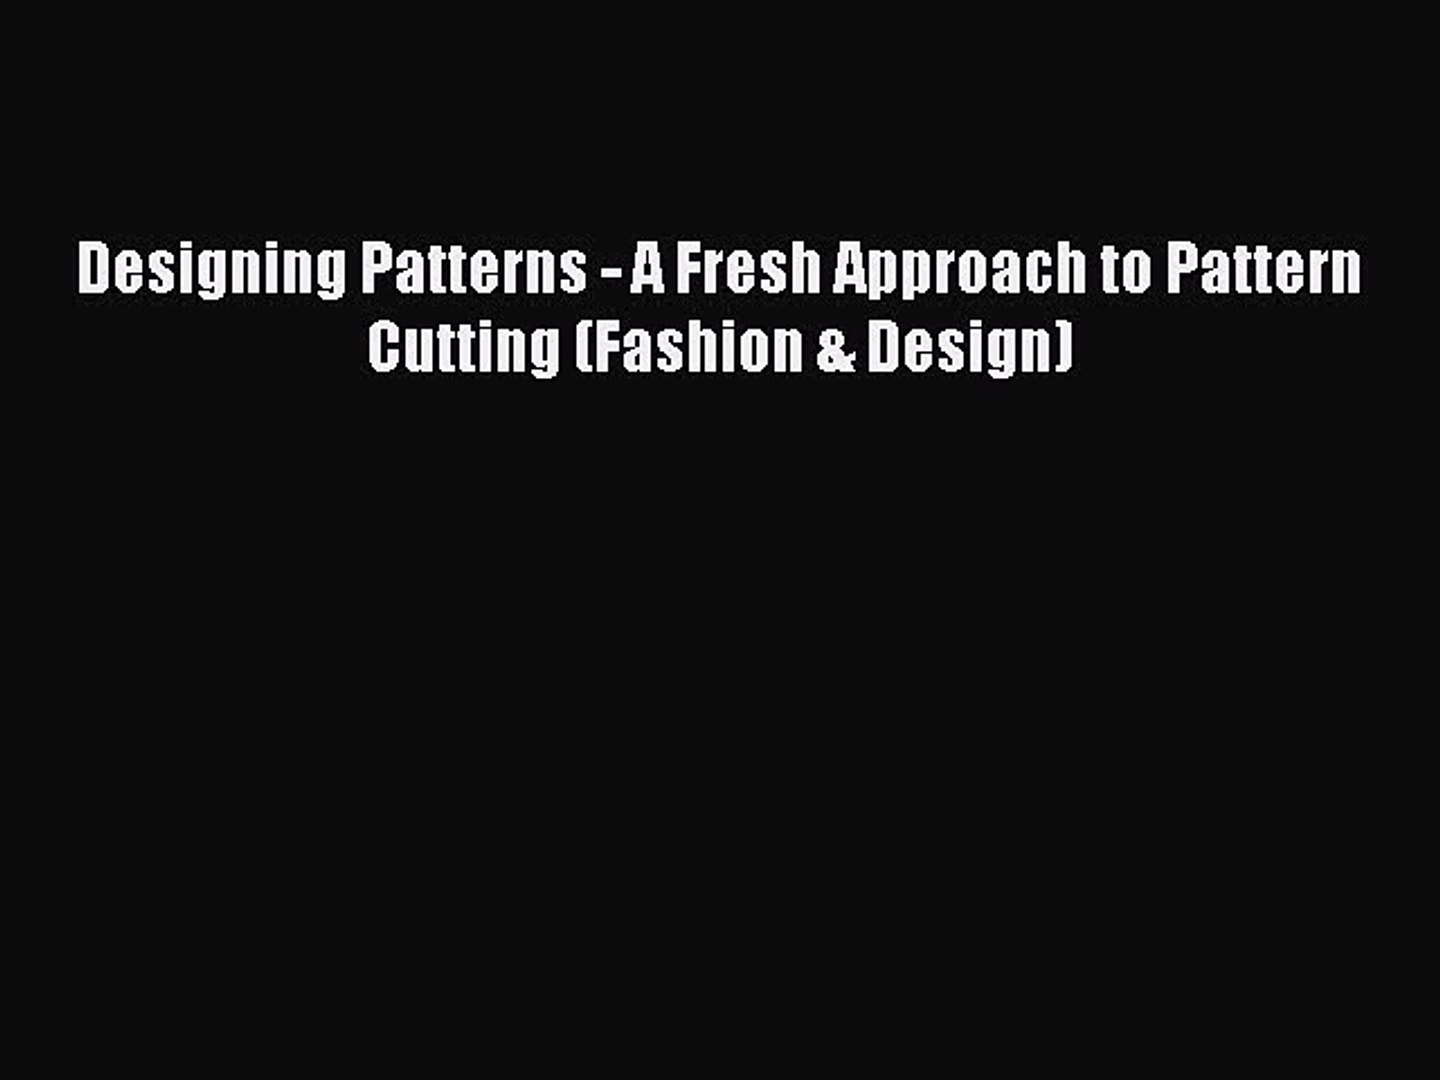 Designing Patterns - A Fresh Approach to Pattern Cutting (Fashion & Design) [PDF] Full Ebook